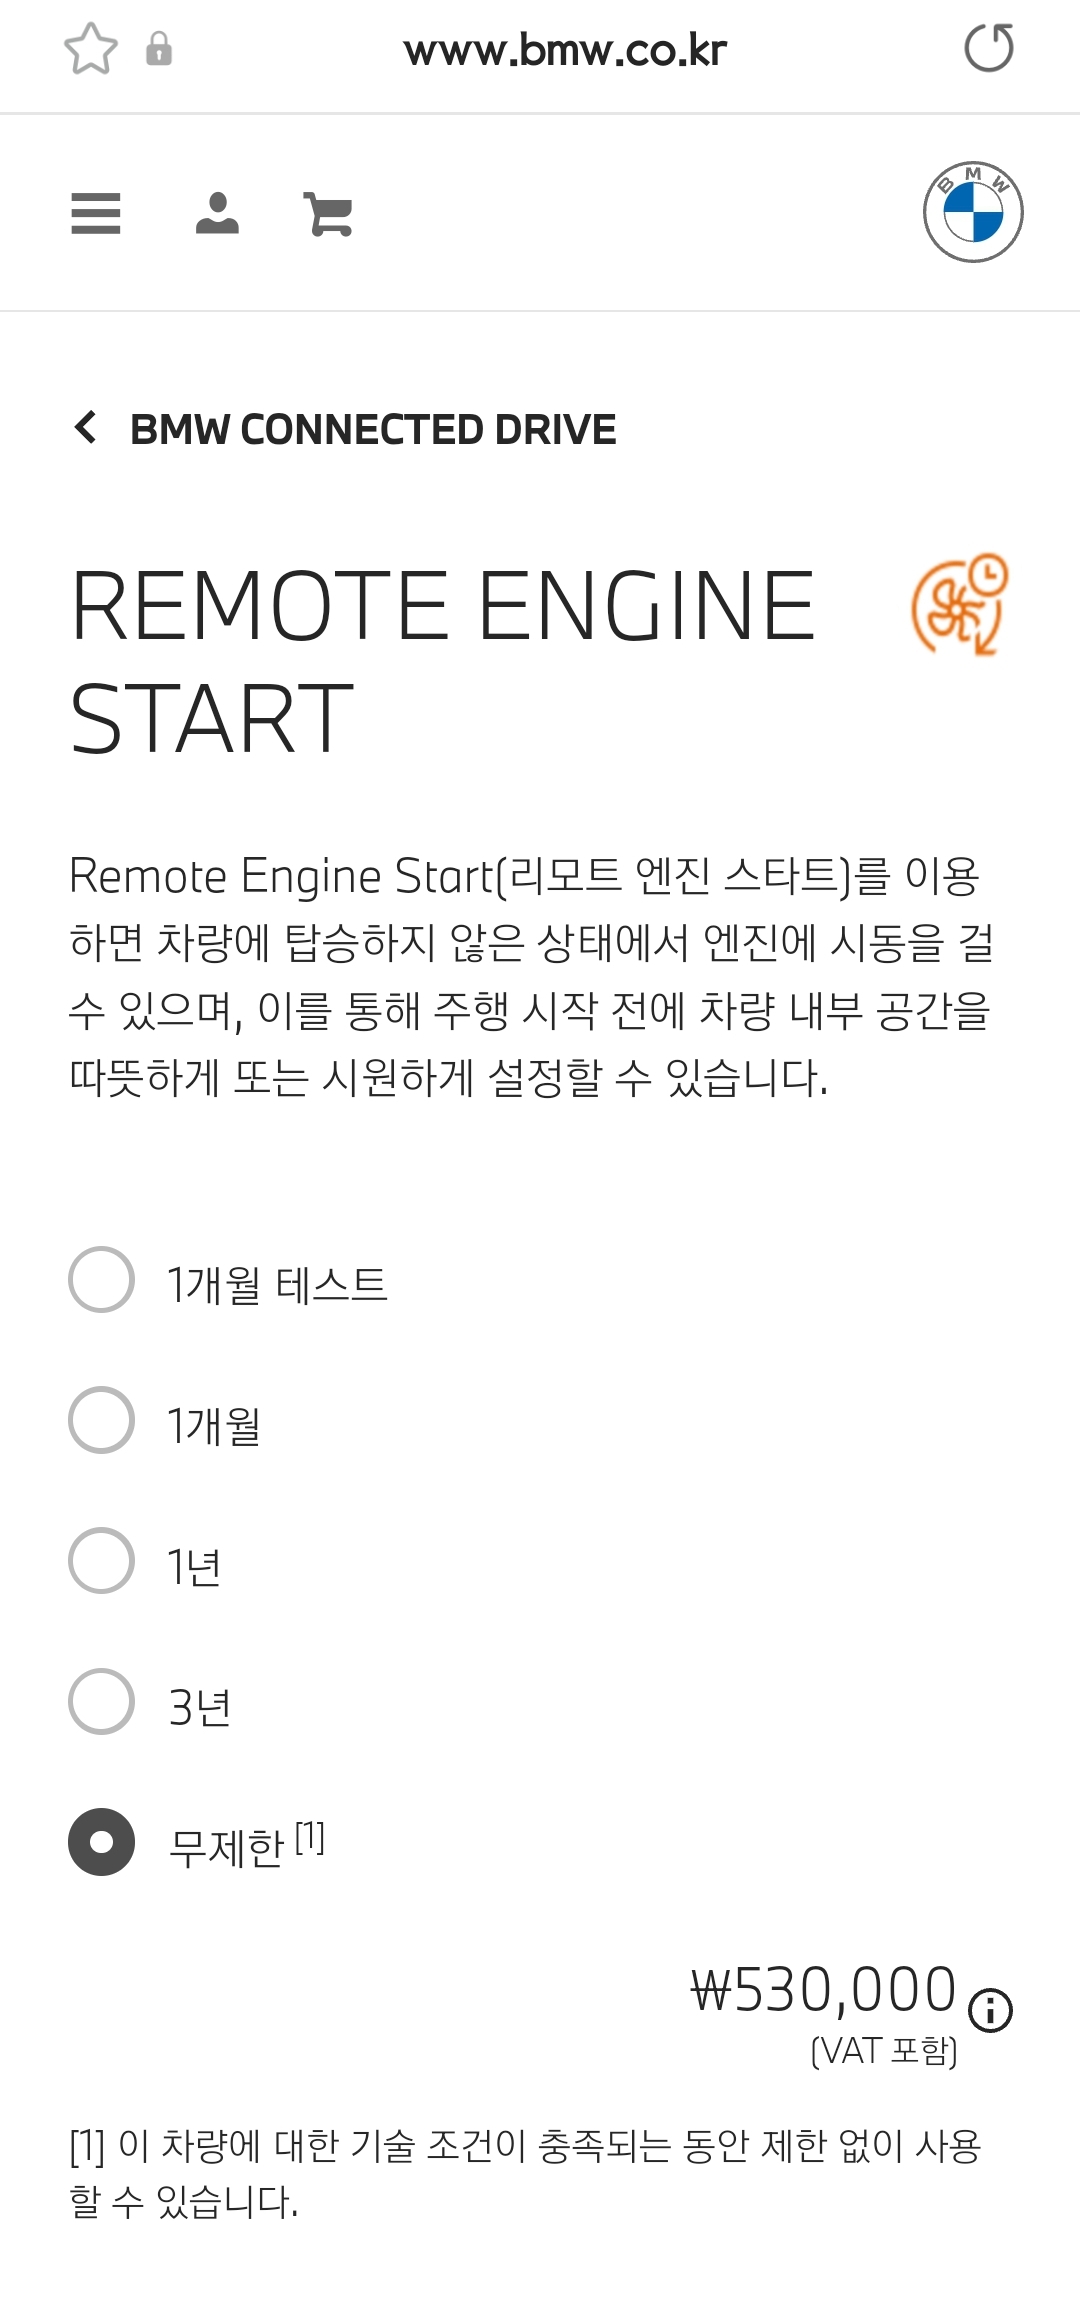 BMW 원격시동
BMW 6지티
REMOTE ENGINE START